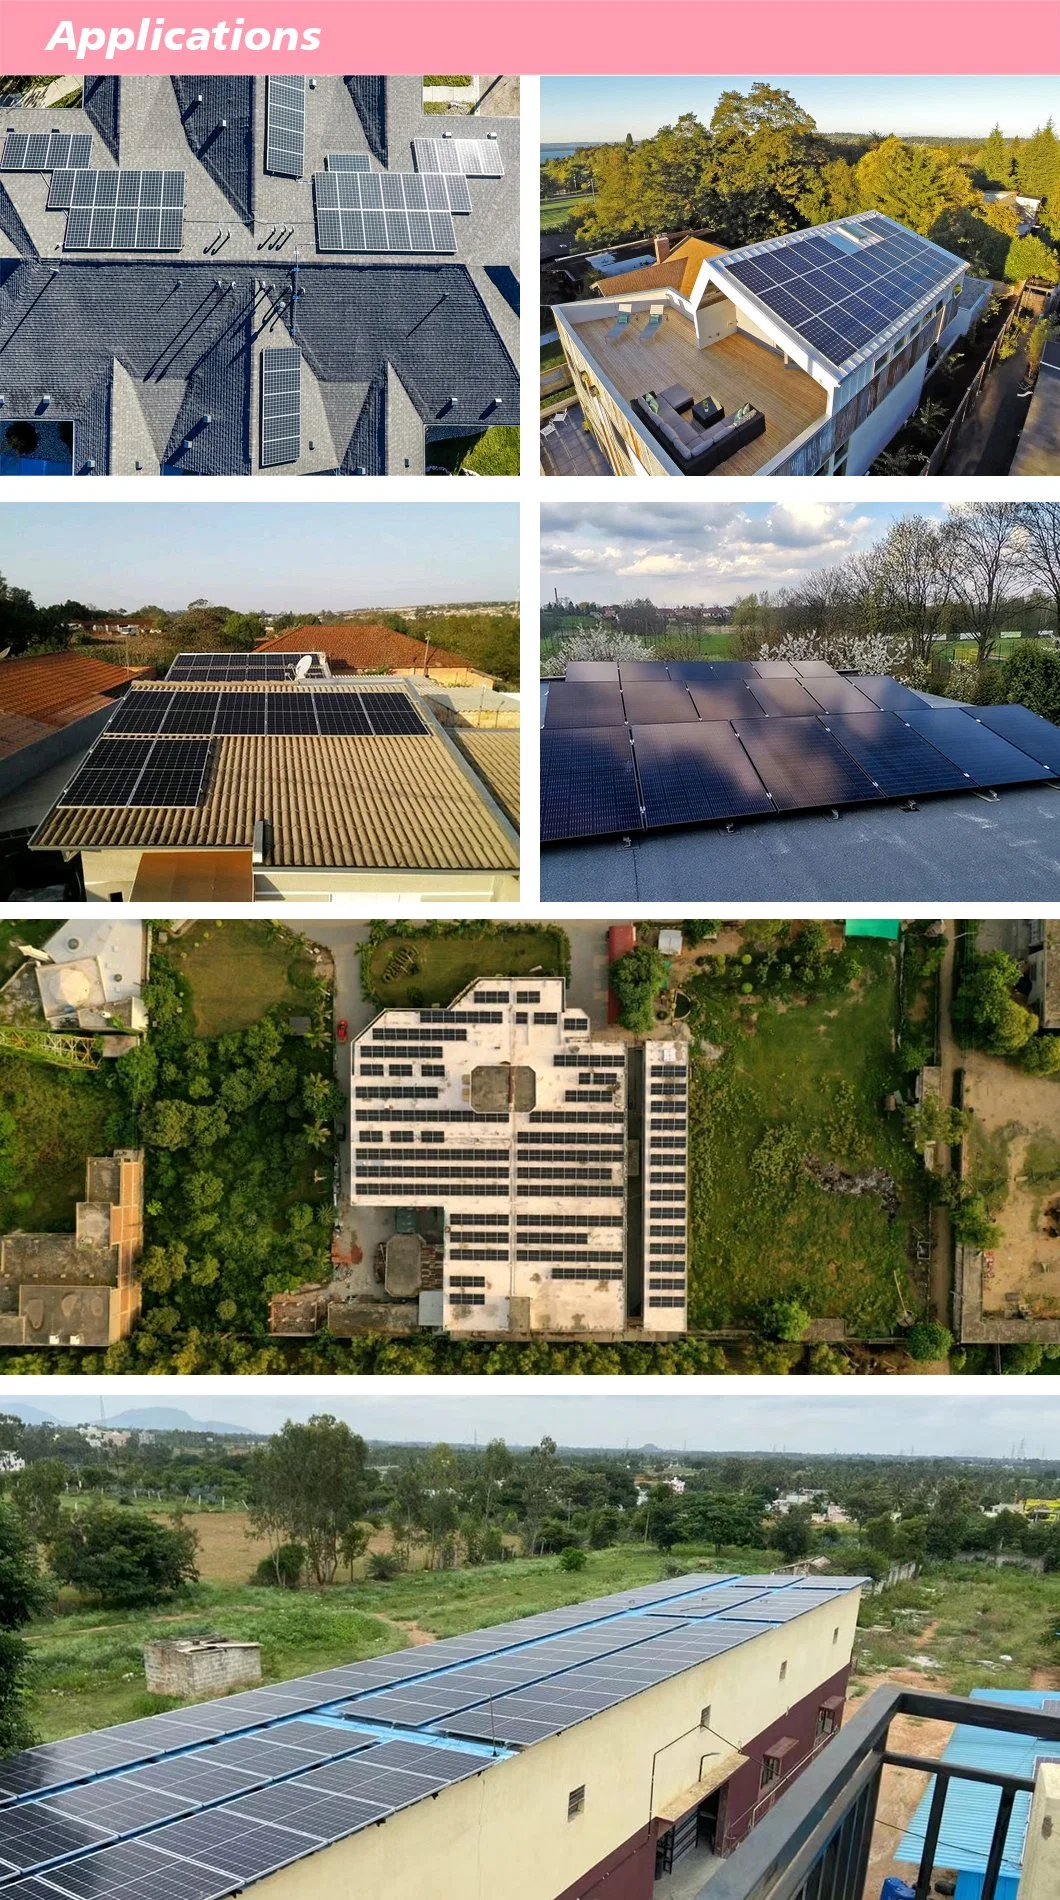 Complete Kits on Grid Solar System 5kw 4kw 3kw 2kw 1kw Grid Tied Solar Energy System with Solar Inverters